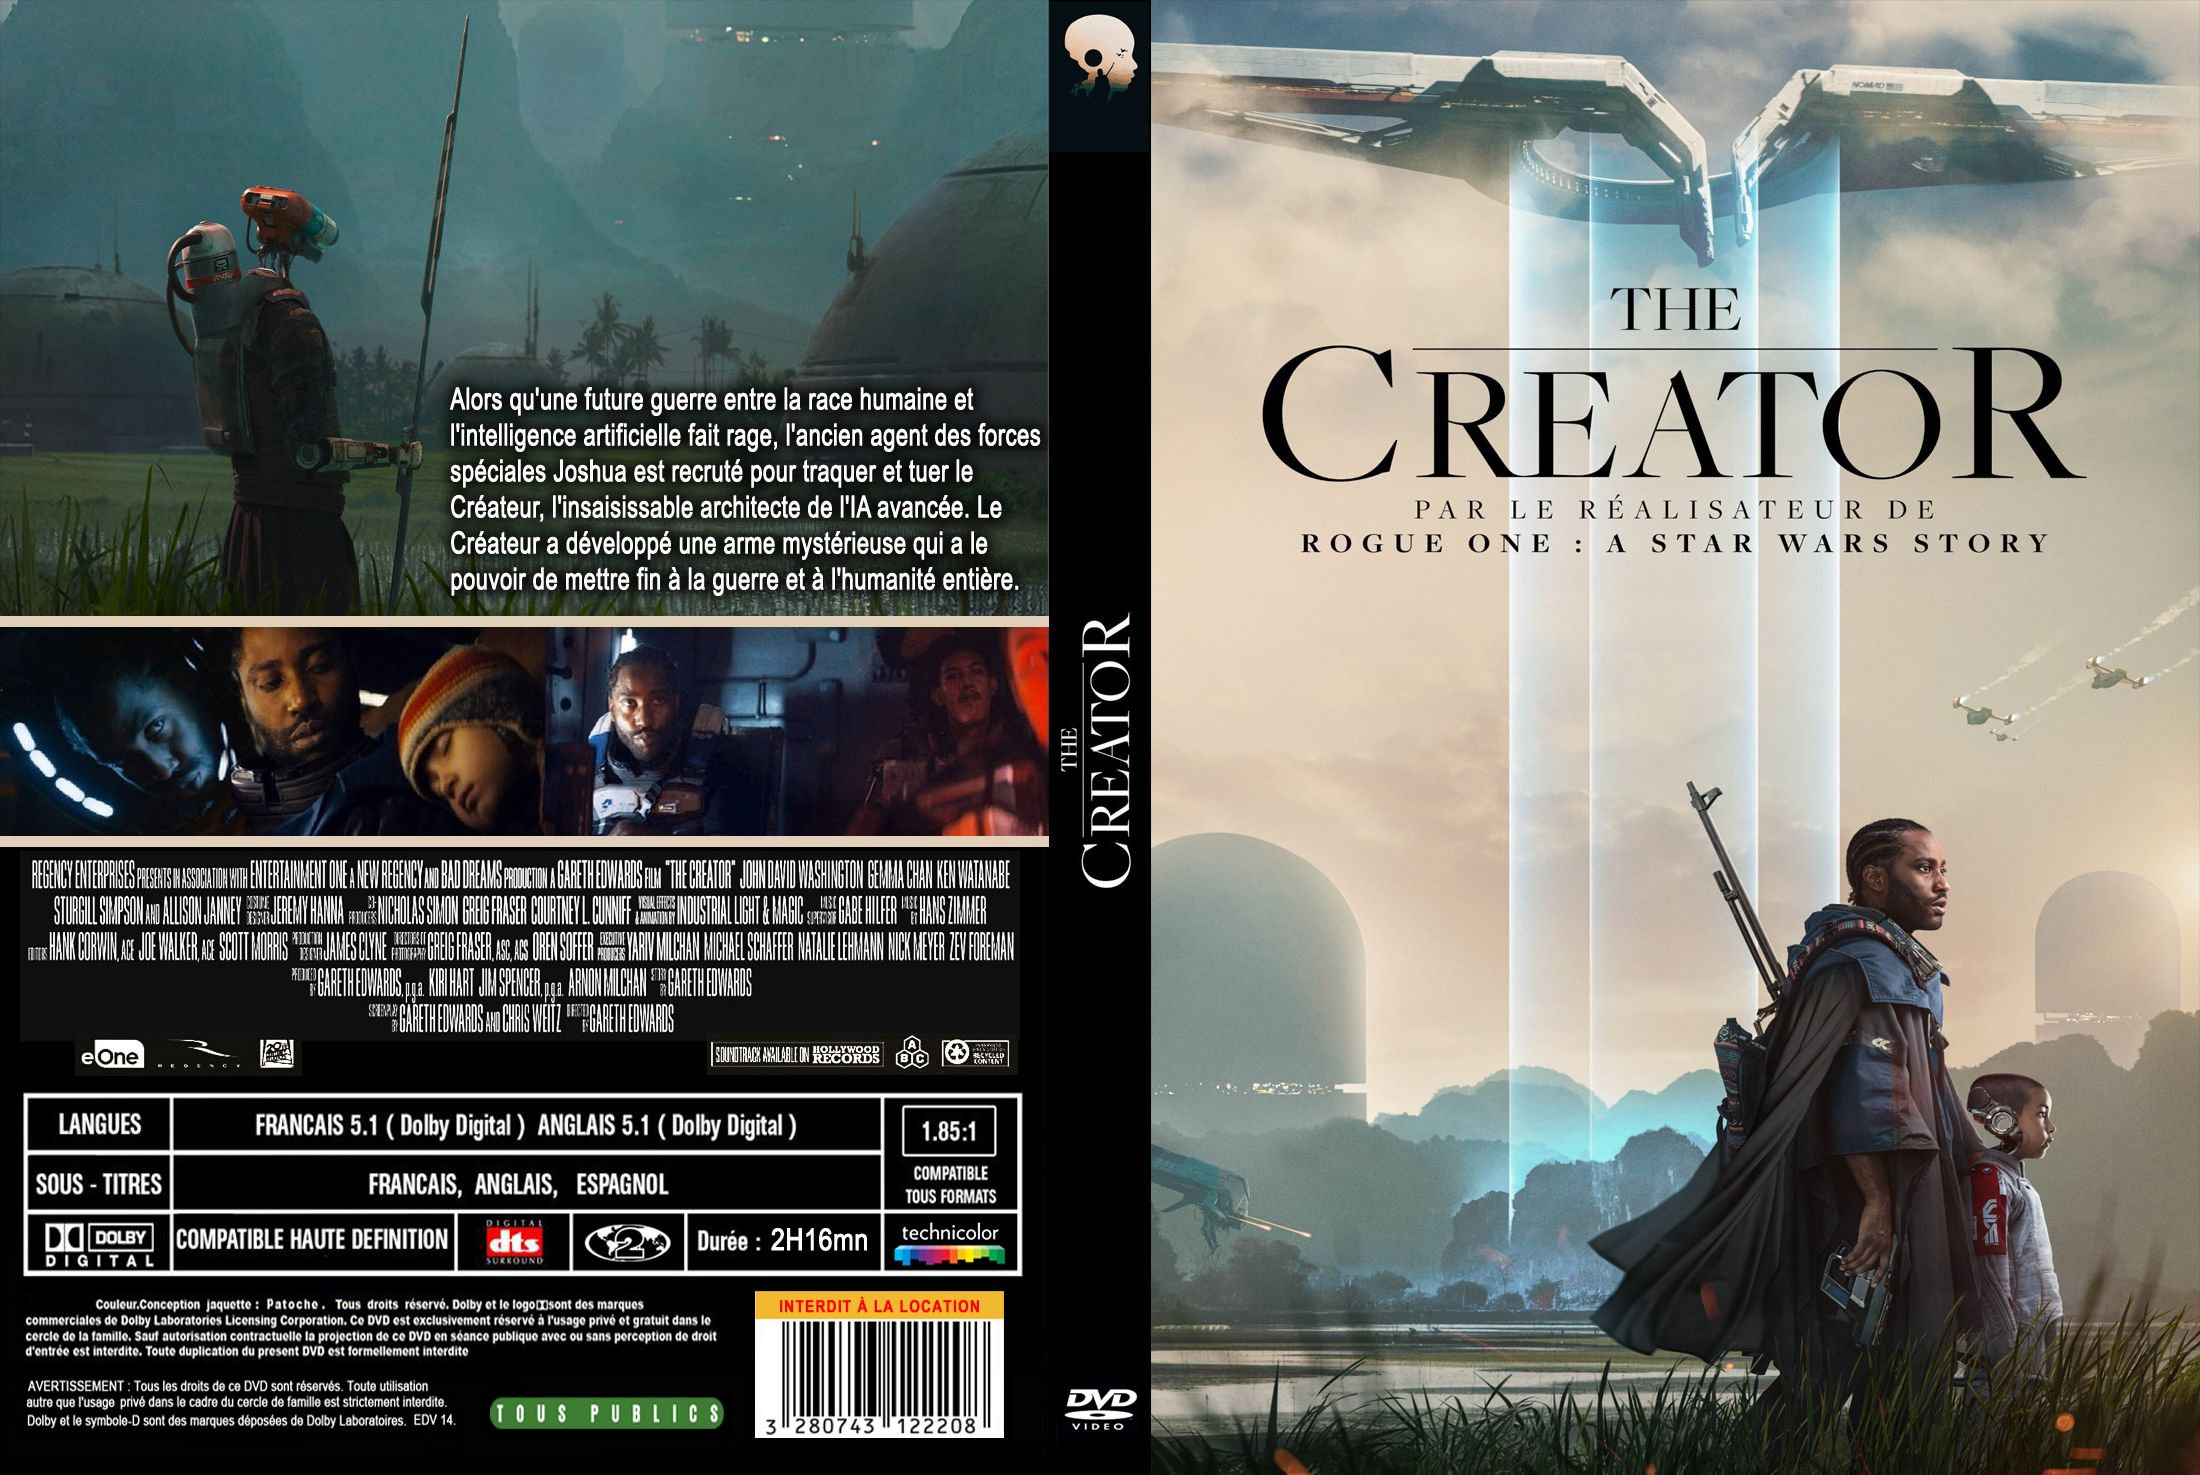 Jaquette DVD The creator custom